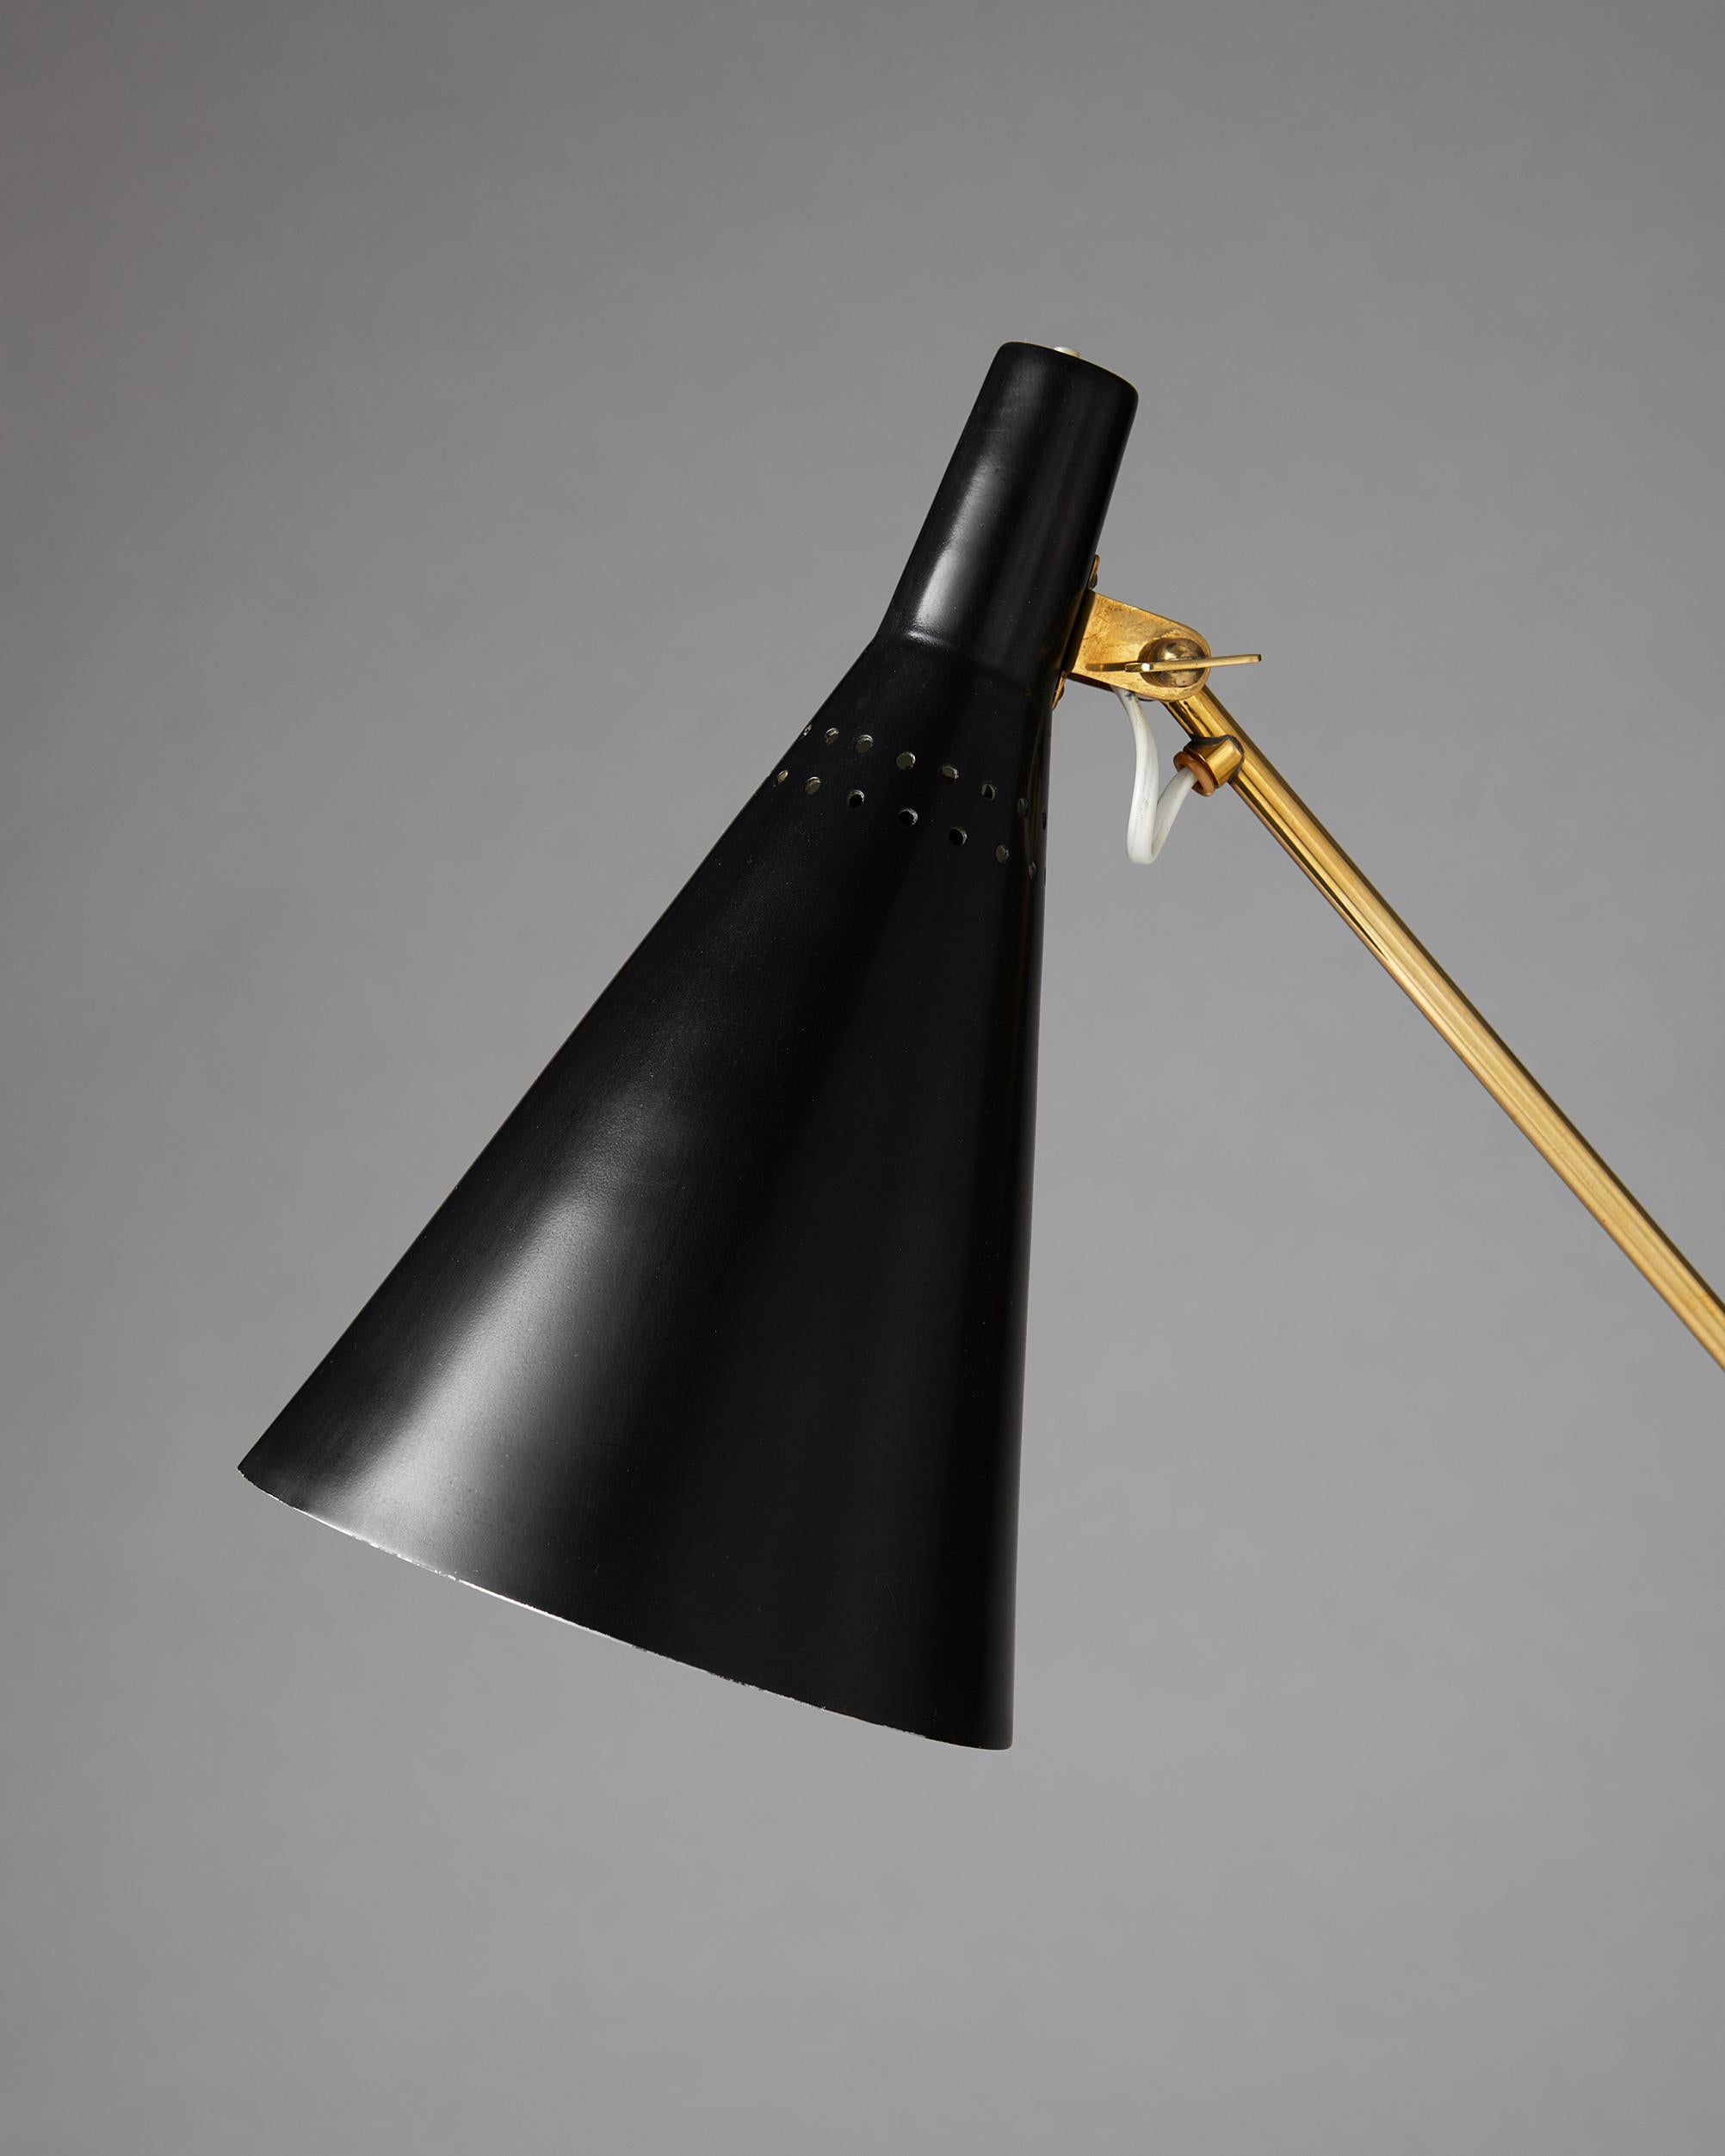 Mid-Century Modern Pair of Floor Lamps “K10-11 Crane” Designed by Tapio Wirkkala for Idman, Finland